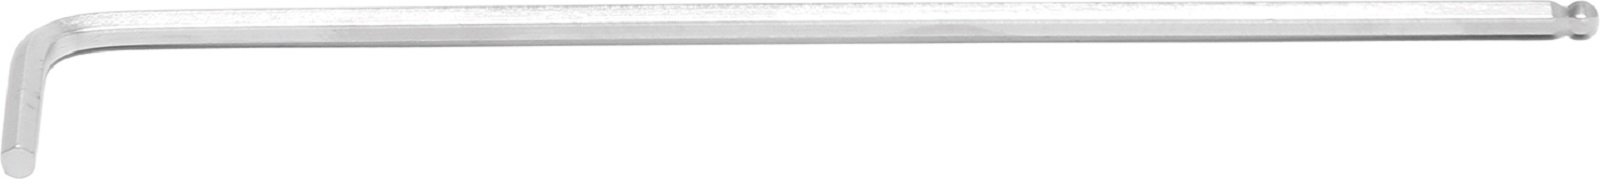 Winkelschlüssel | extra lang | Innensechskant/Innensechskant mit Kugelkopf 2,5 mm - BGS 790-2.5